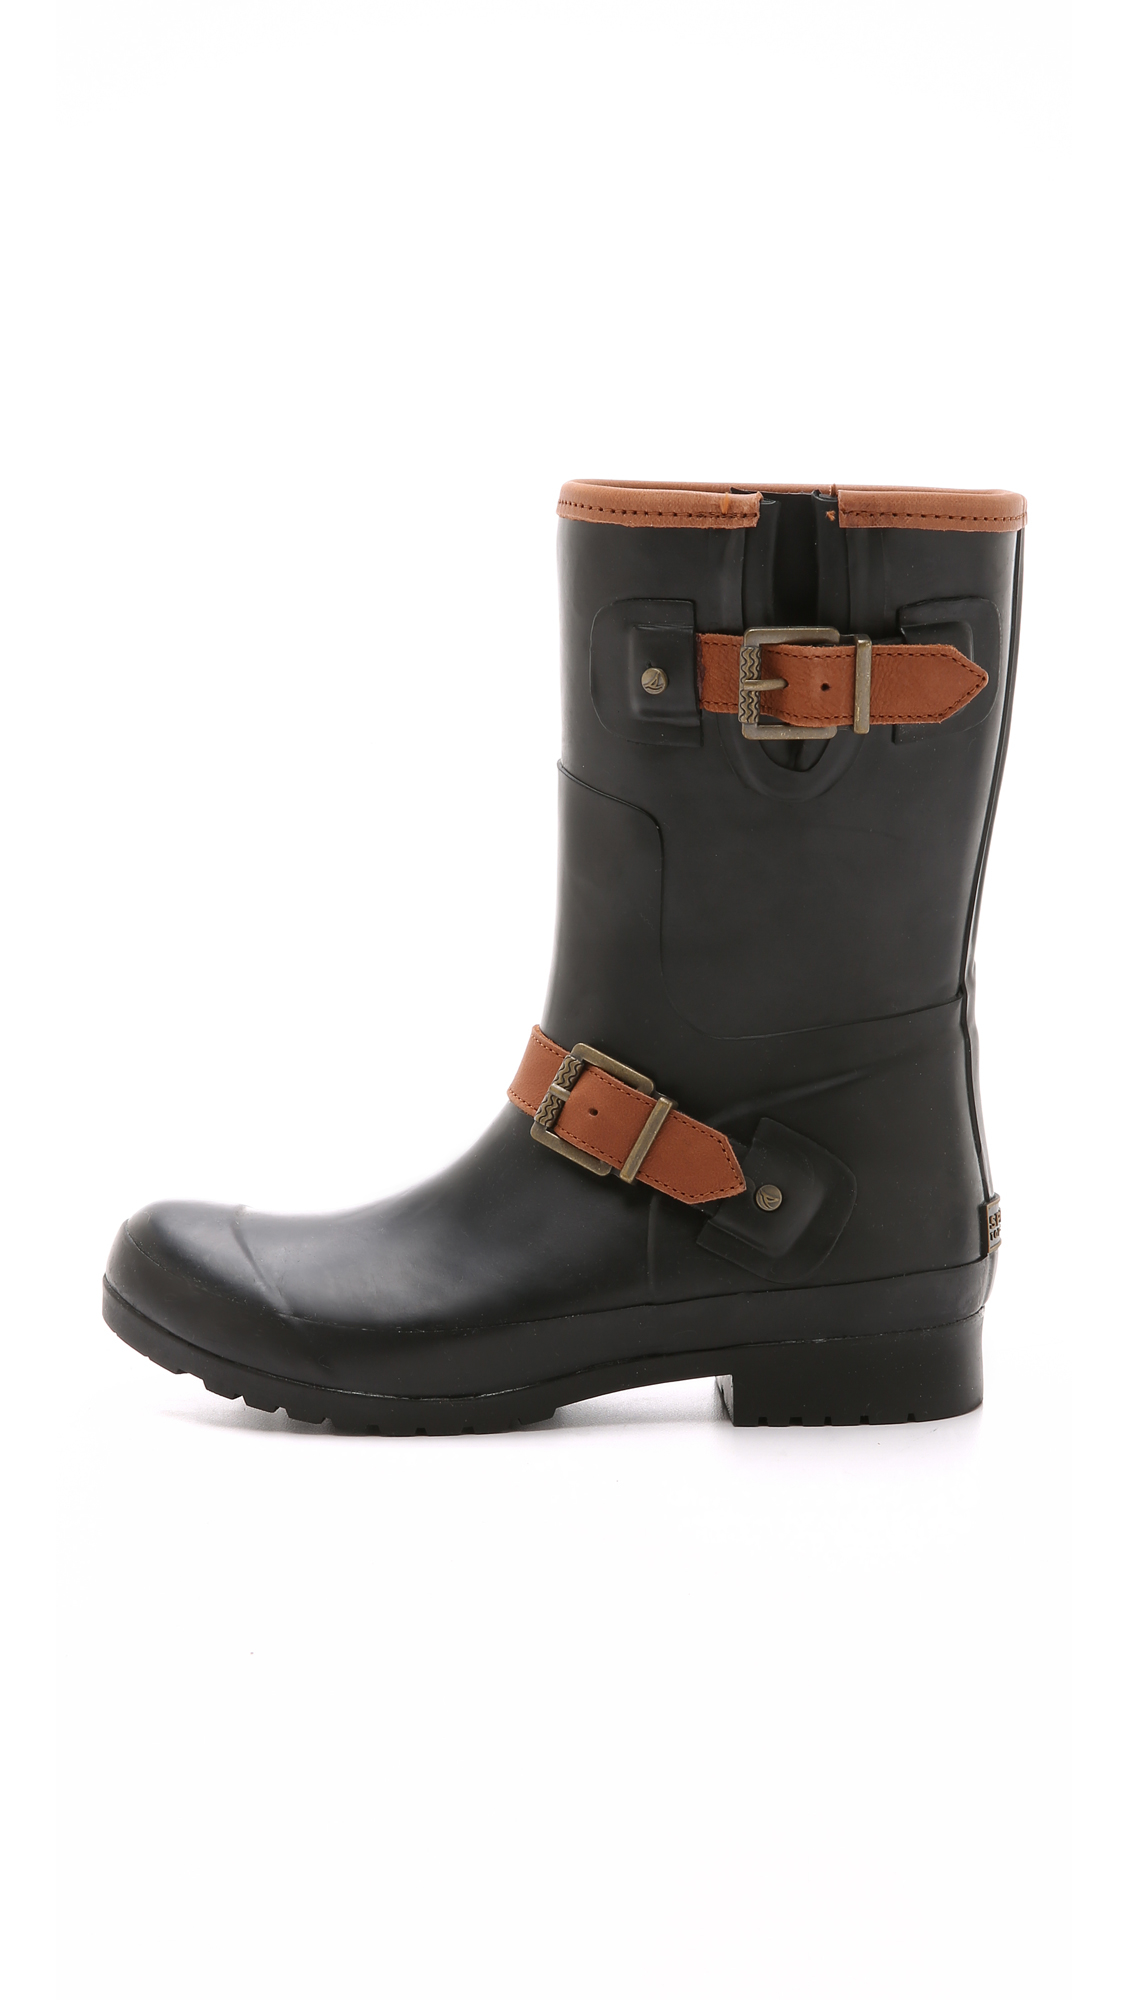 Lyst - Sperry Top-Sider Walker Fog Rain Boots - Black in Black